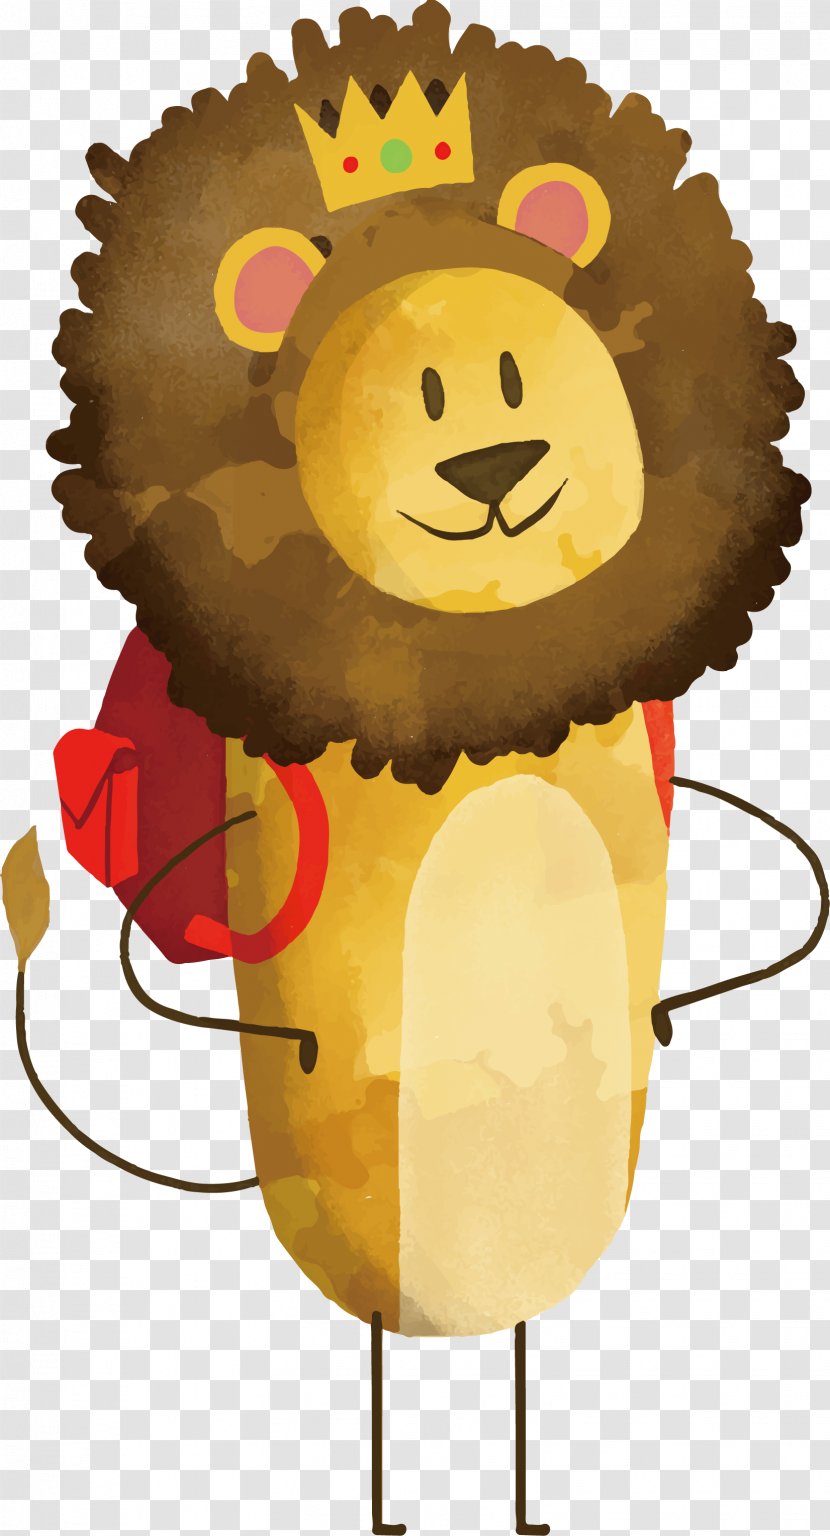 Lion Cartoon Tiger Illustration - Hand Painted King Transparent PNG